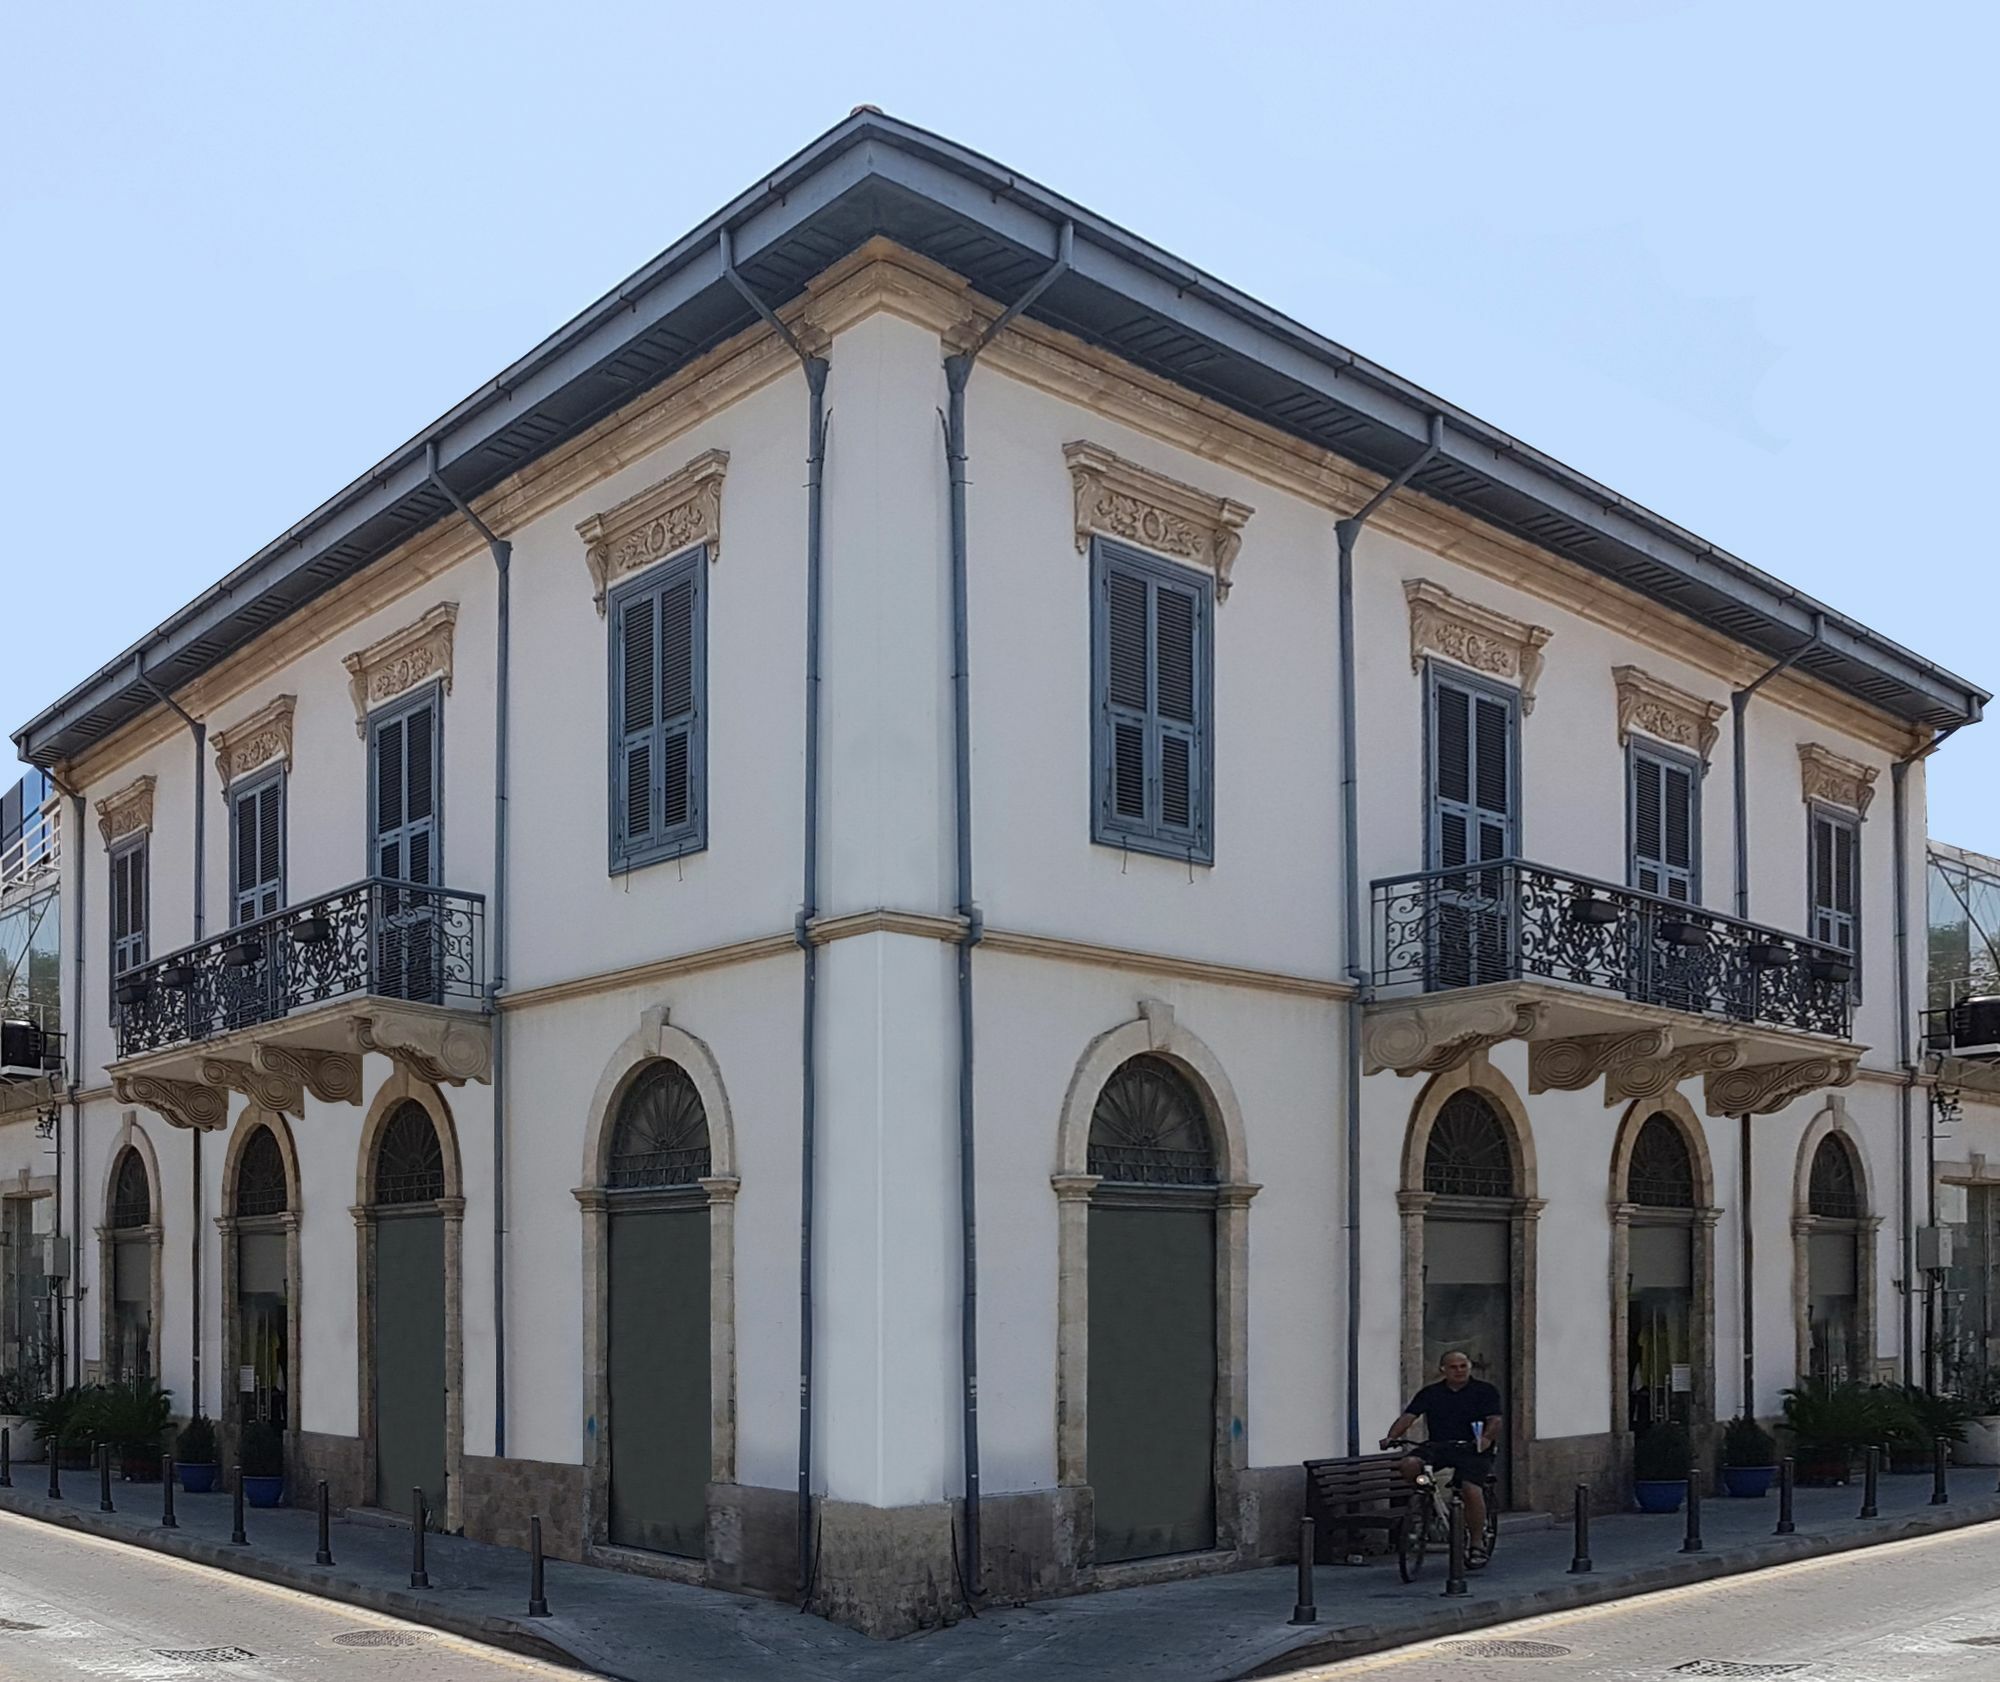 Hotel Limassol Old Town Mansion Exterior foto